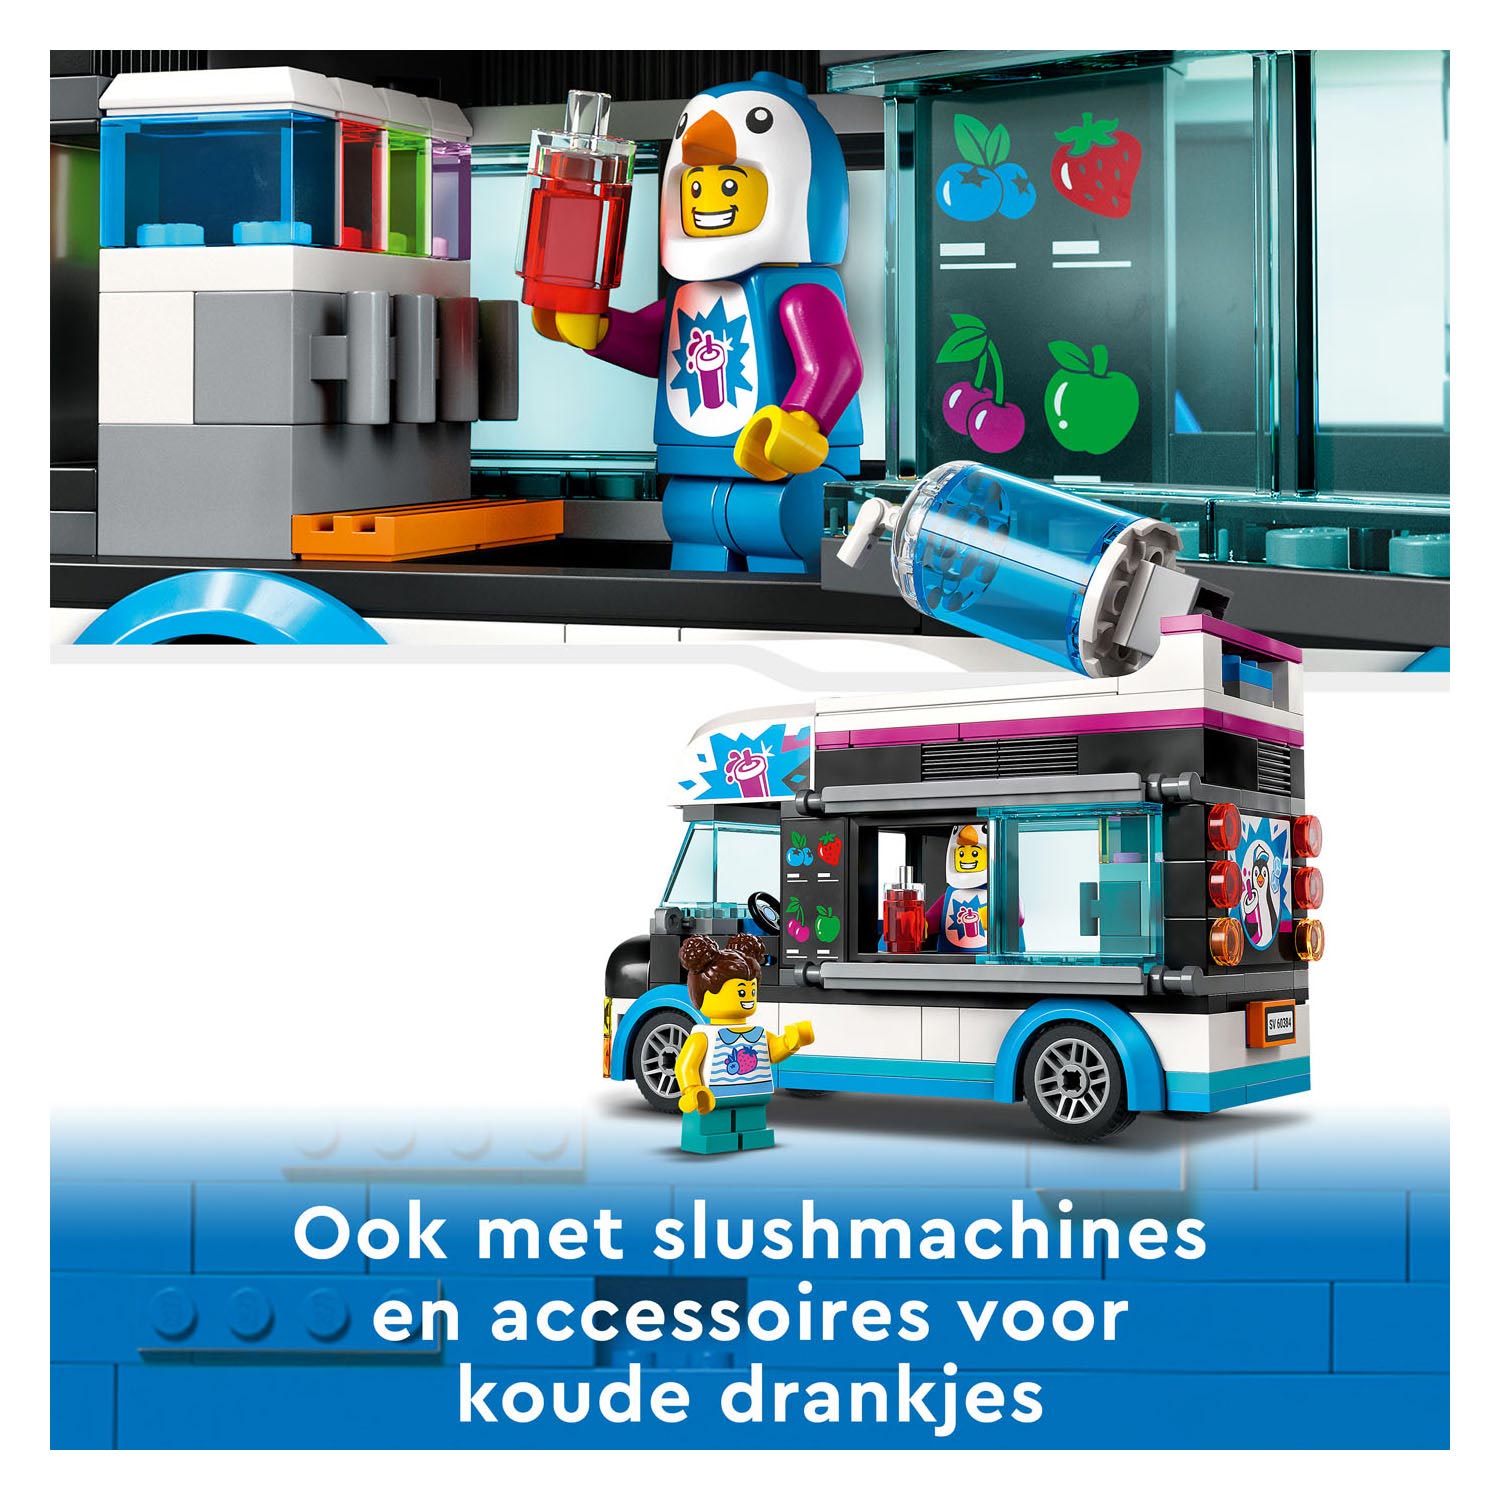 LEGO City 60384 Pinguïn Slush Truck